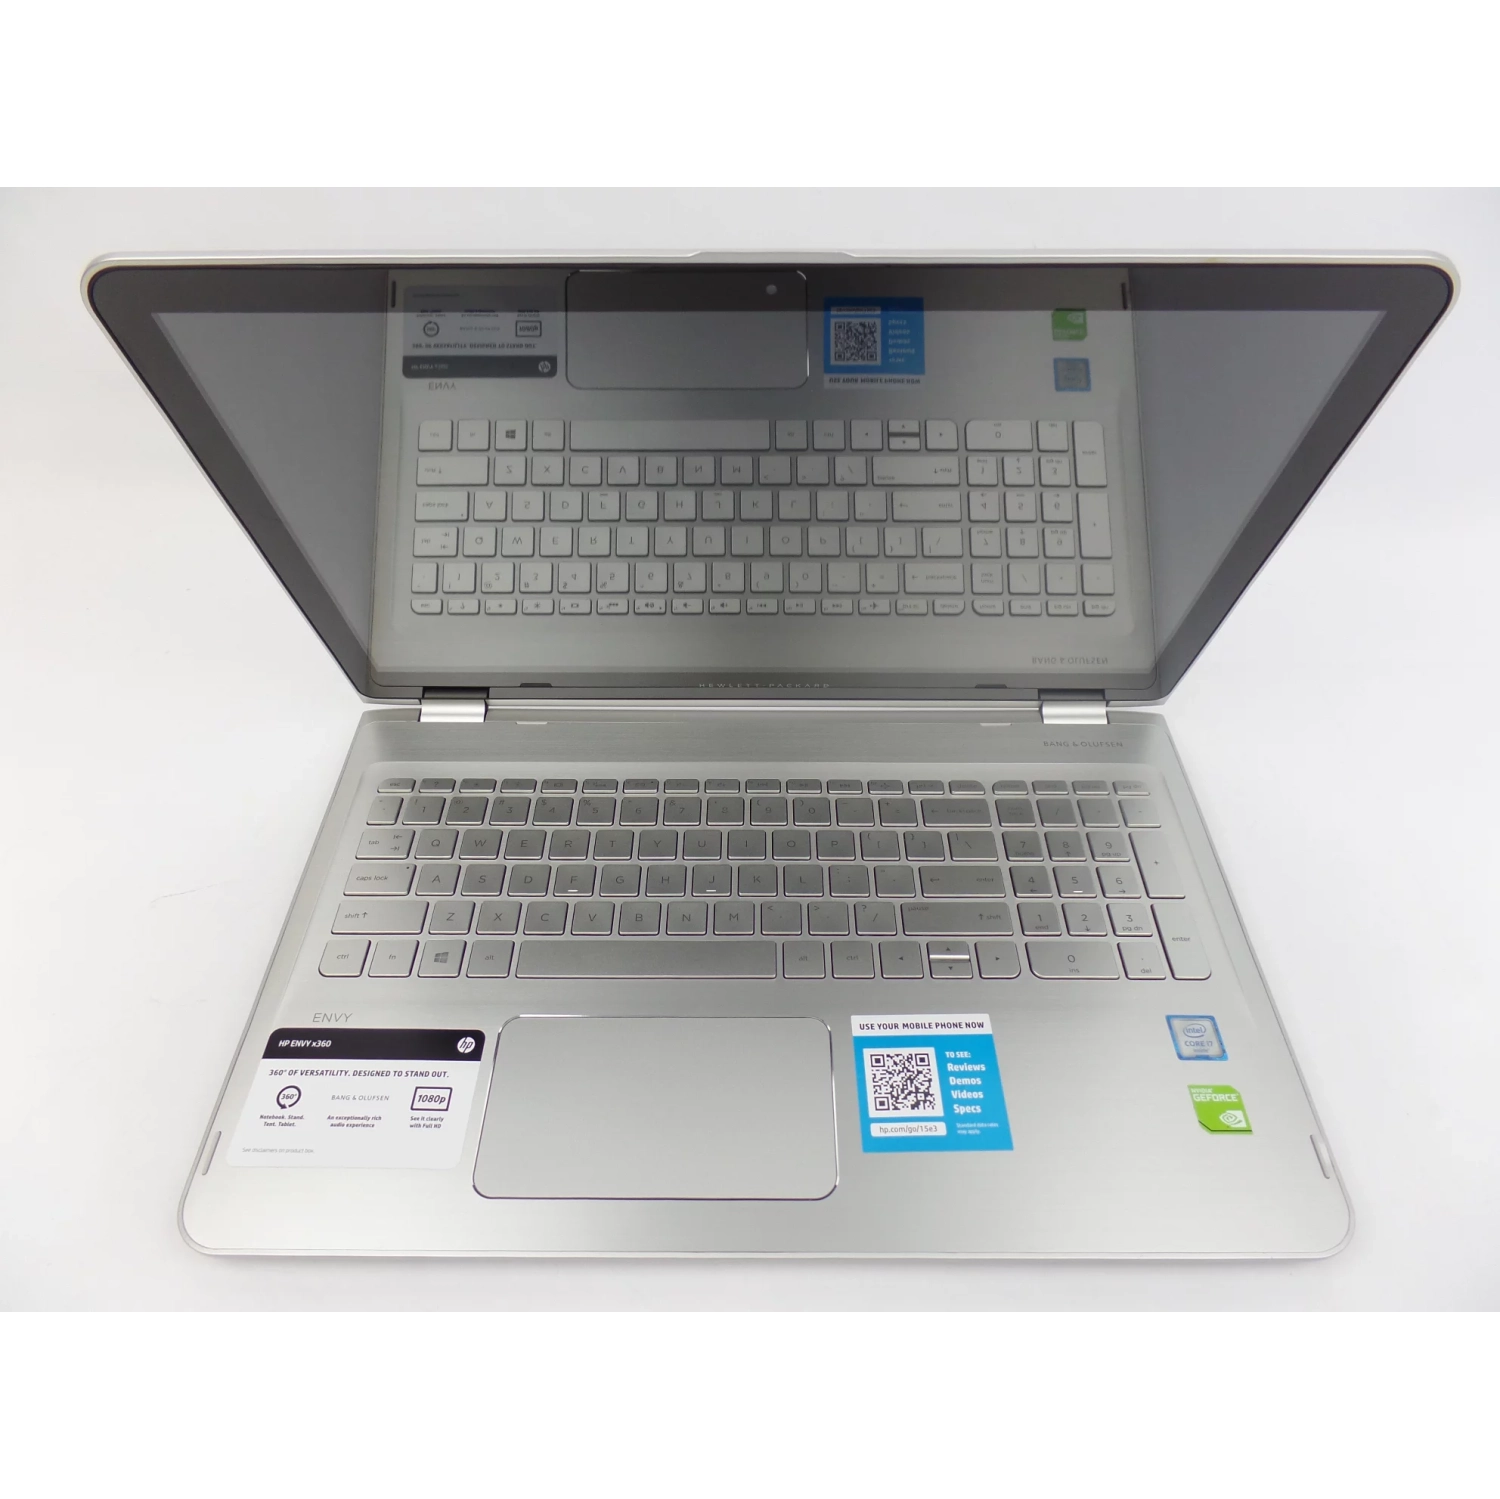 HP ENVY X360 M6-W105DX, 15.6" FHD Touchscreen Laptop, Core i7 6th Gen, 8Gb RAM, 256Gb SSD, Windows 10 (Refurbished Fair)